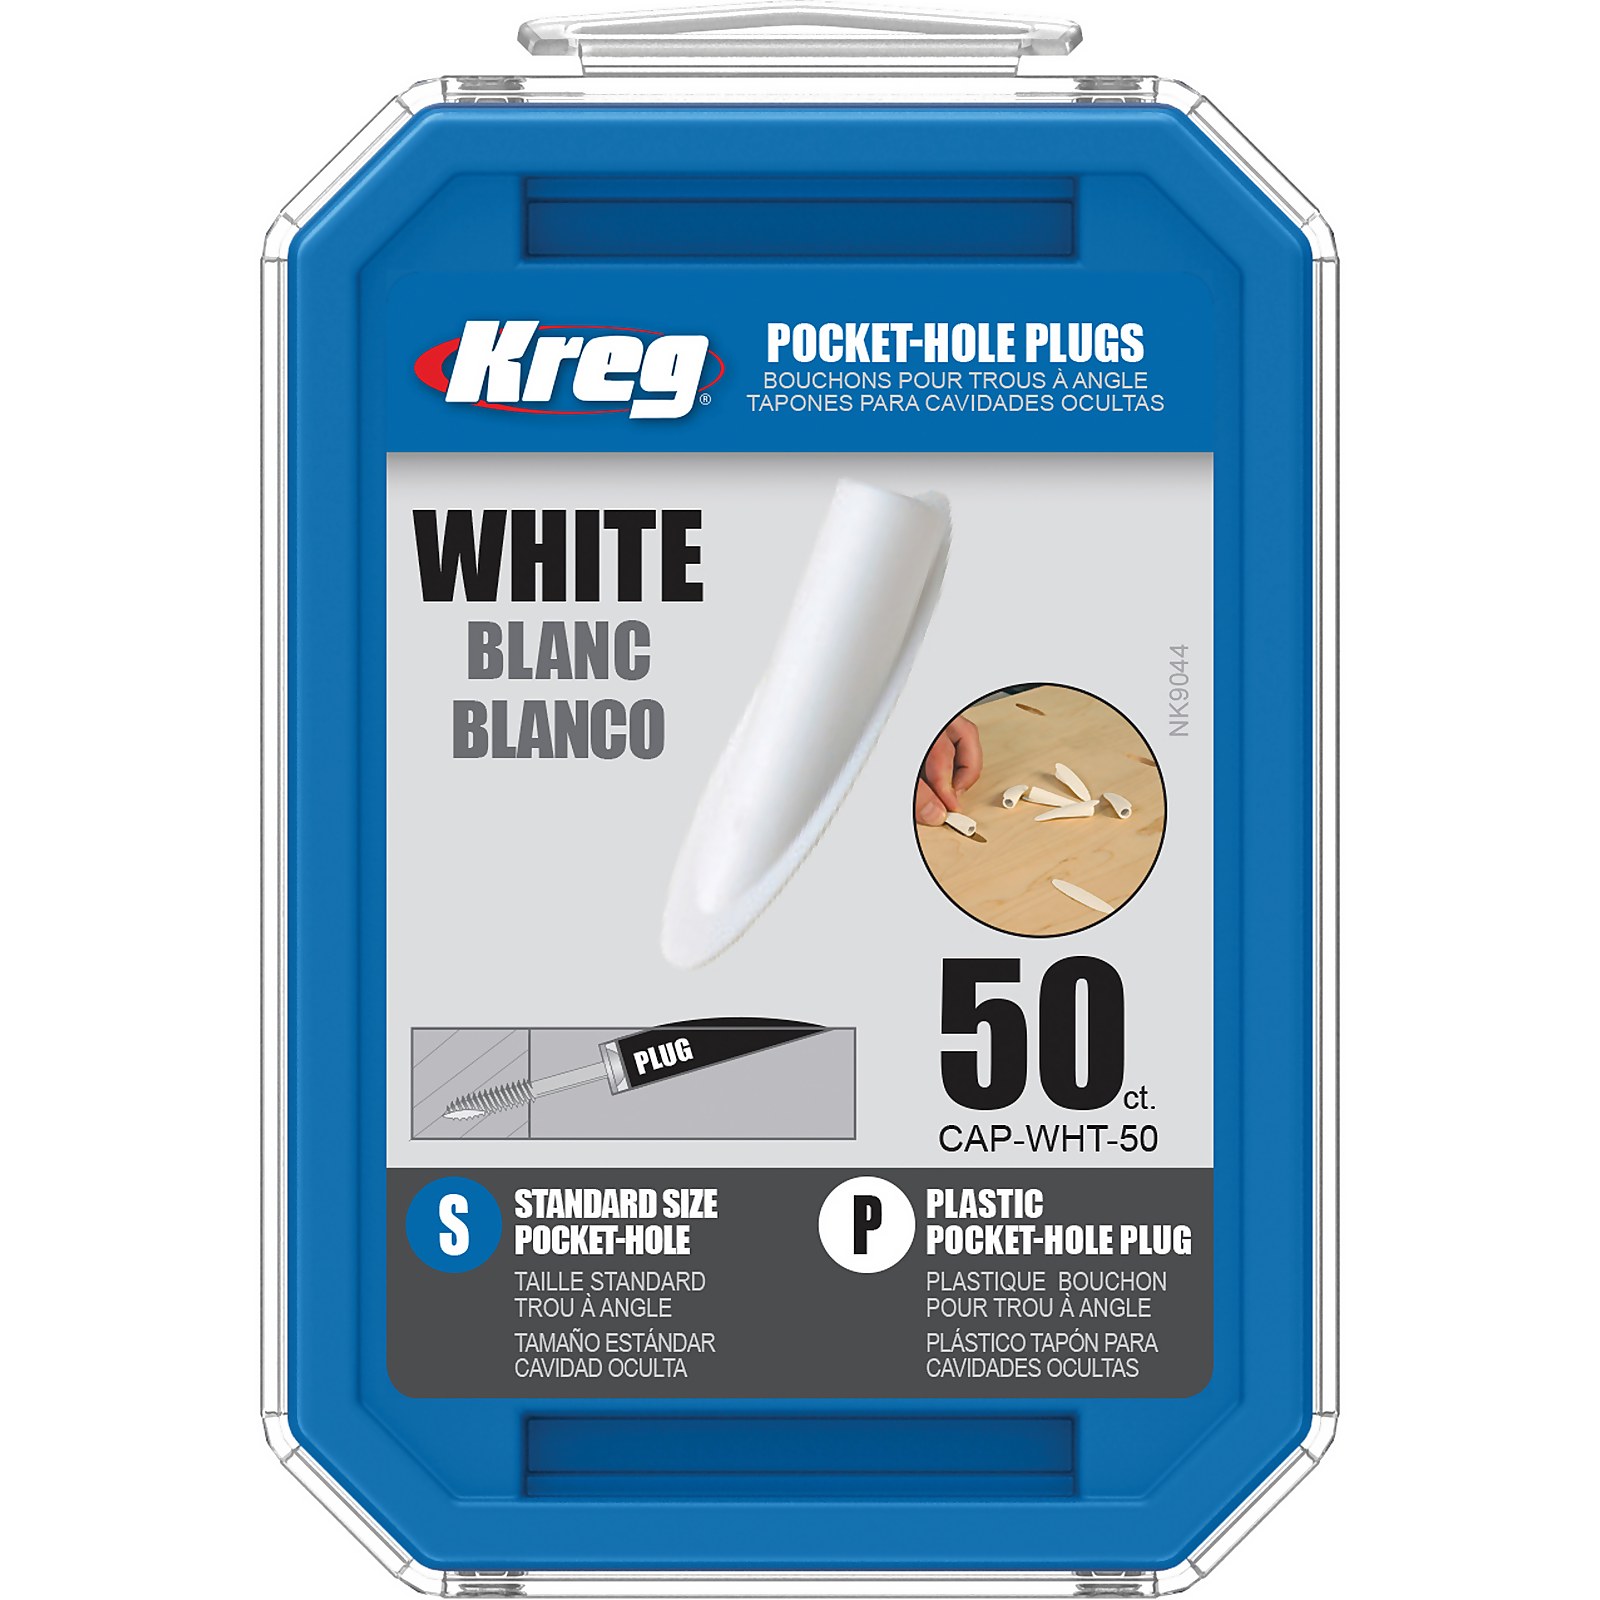 Photo of Kreg Cap-wht-50 White Plastic Pocket-hole Plugs - 50 Pack